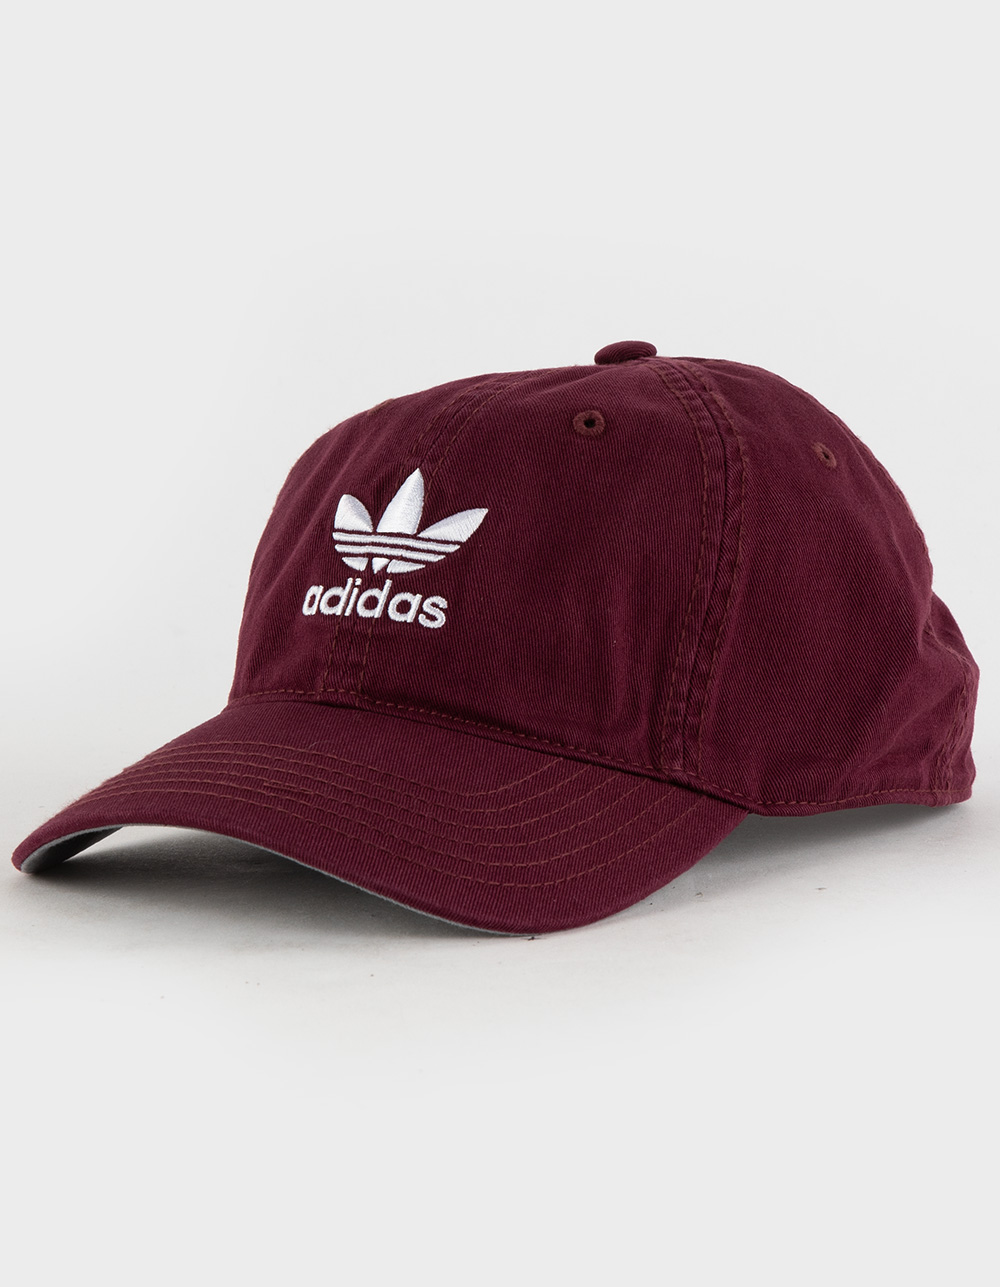 ADIDAS Originals A-Frame Mens Snapback Hat